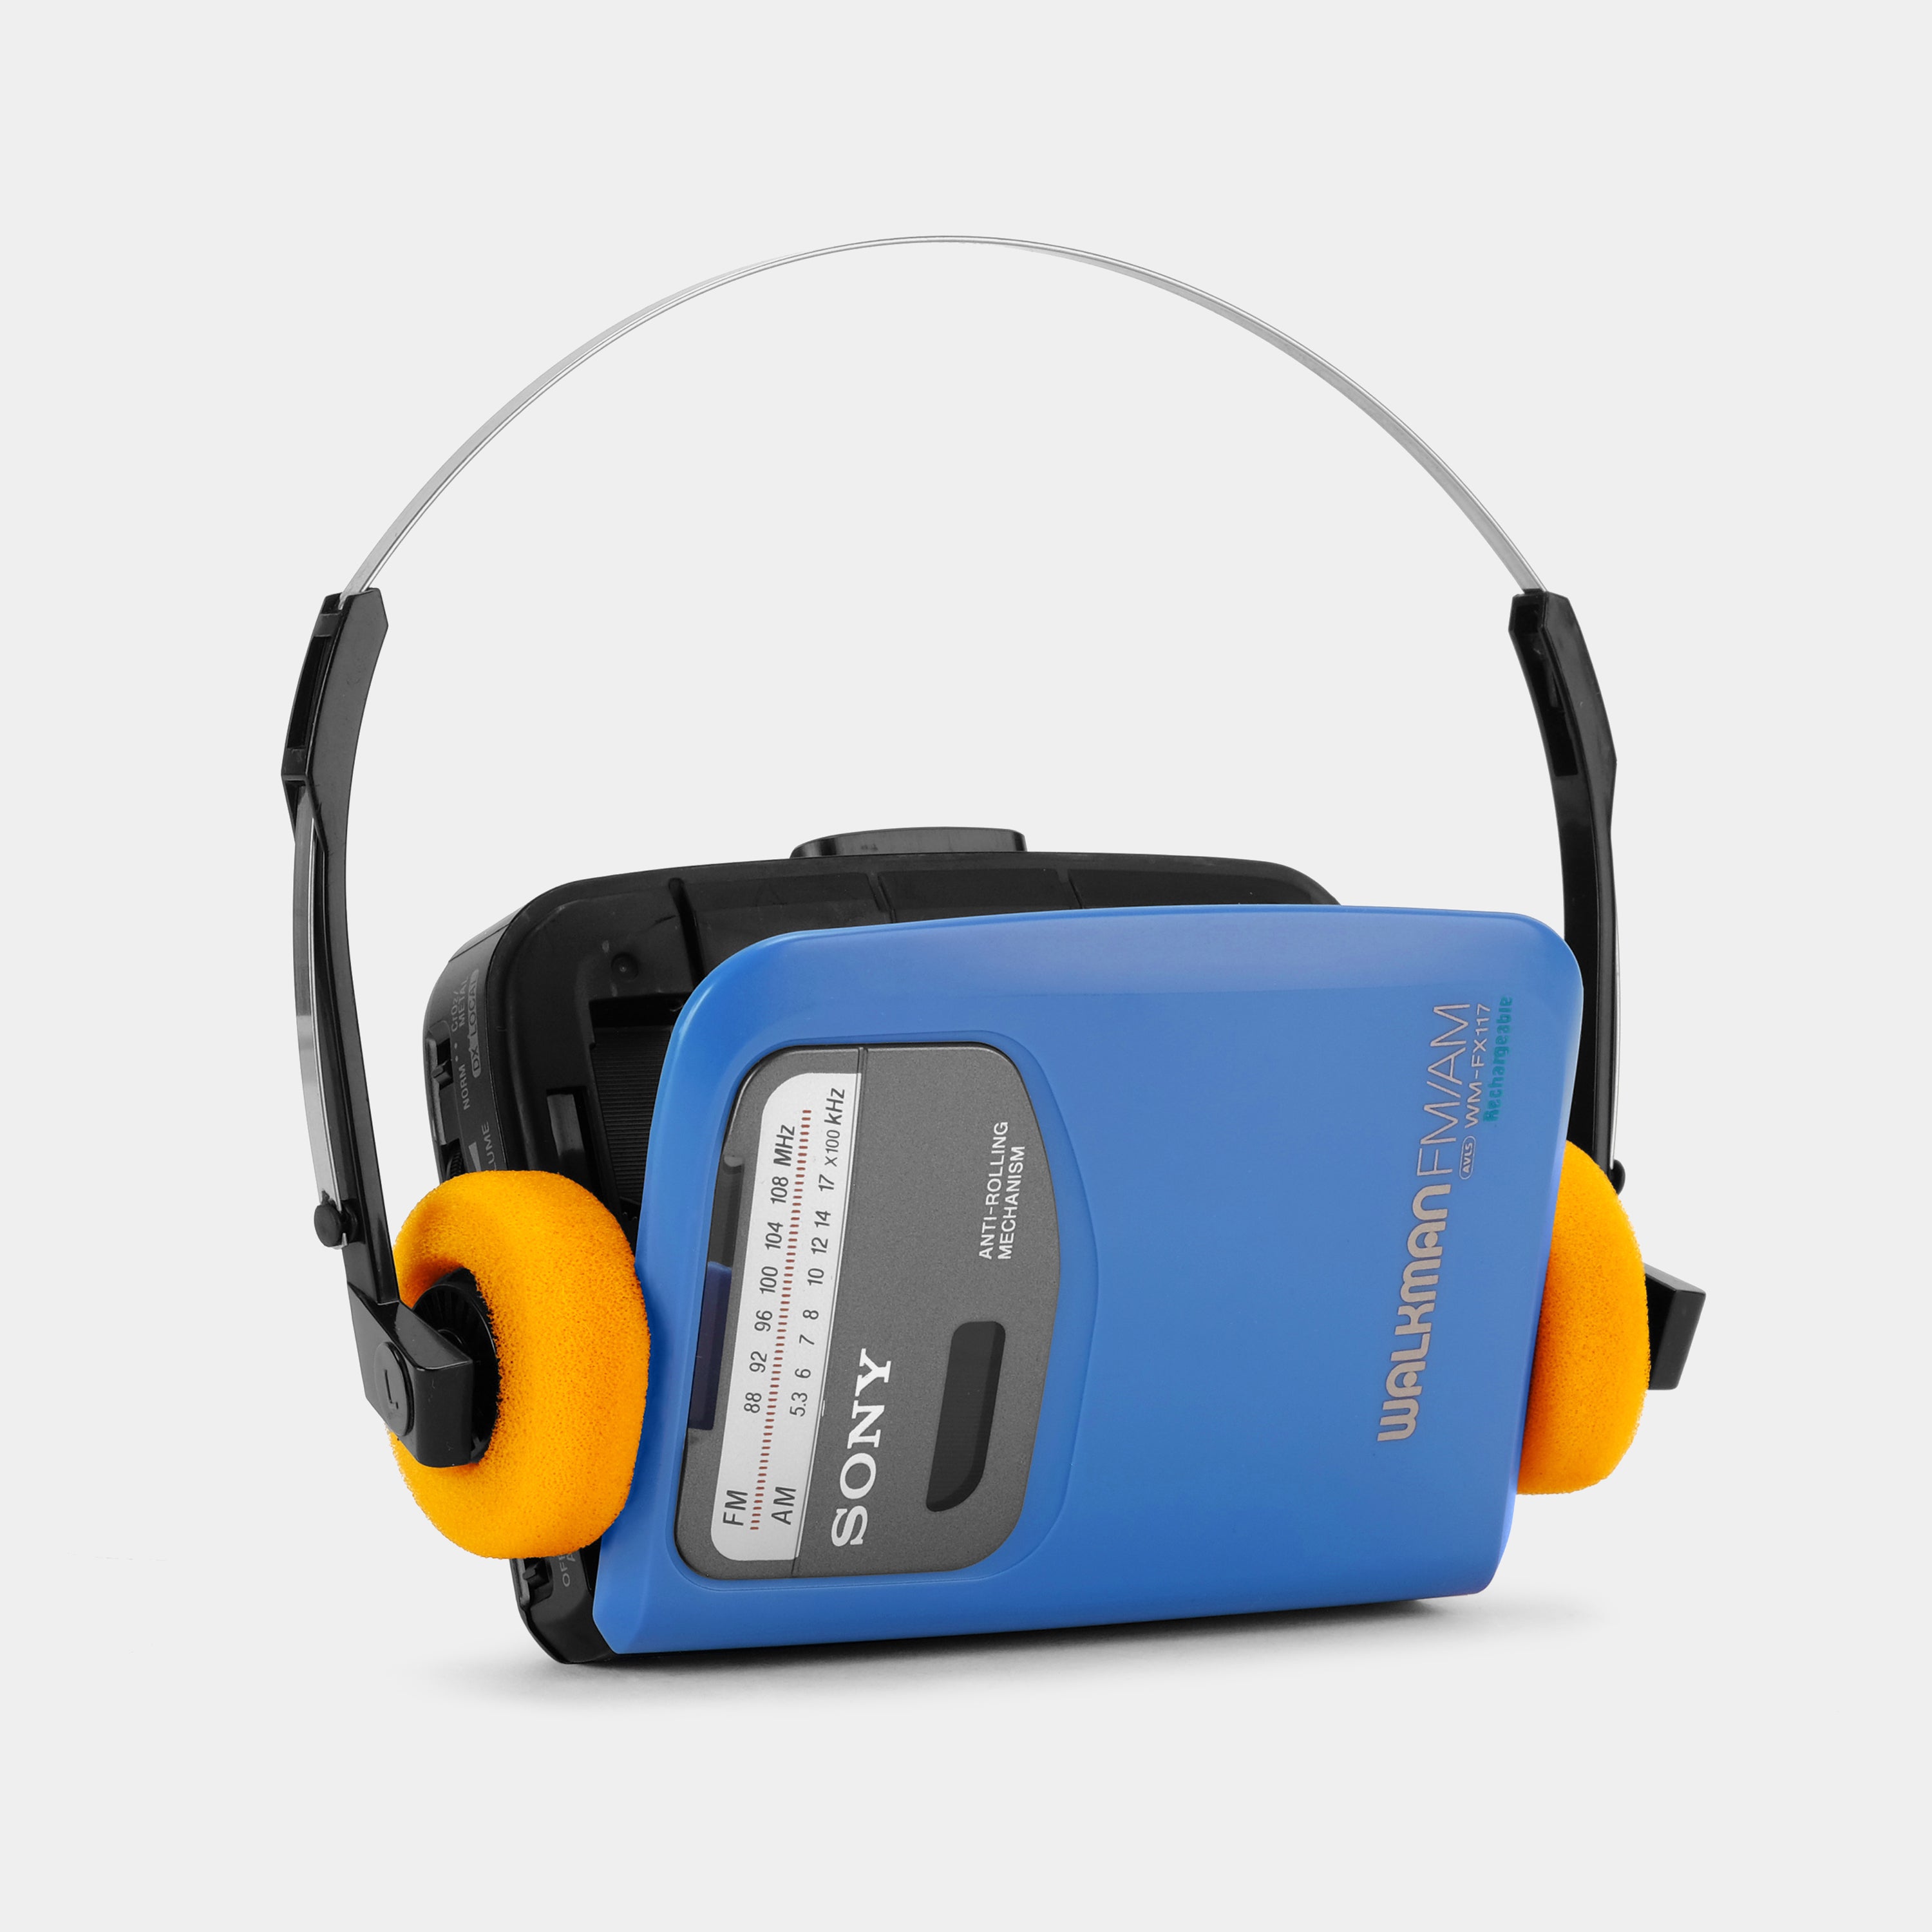 Sony Walkman WM-FX117 AM/FM Blue Portable Cassette Player